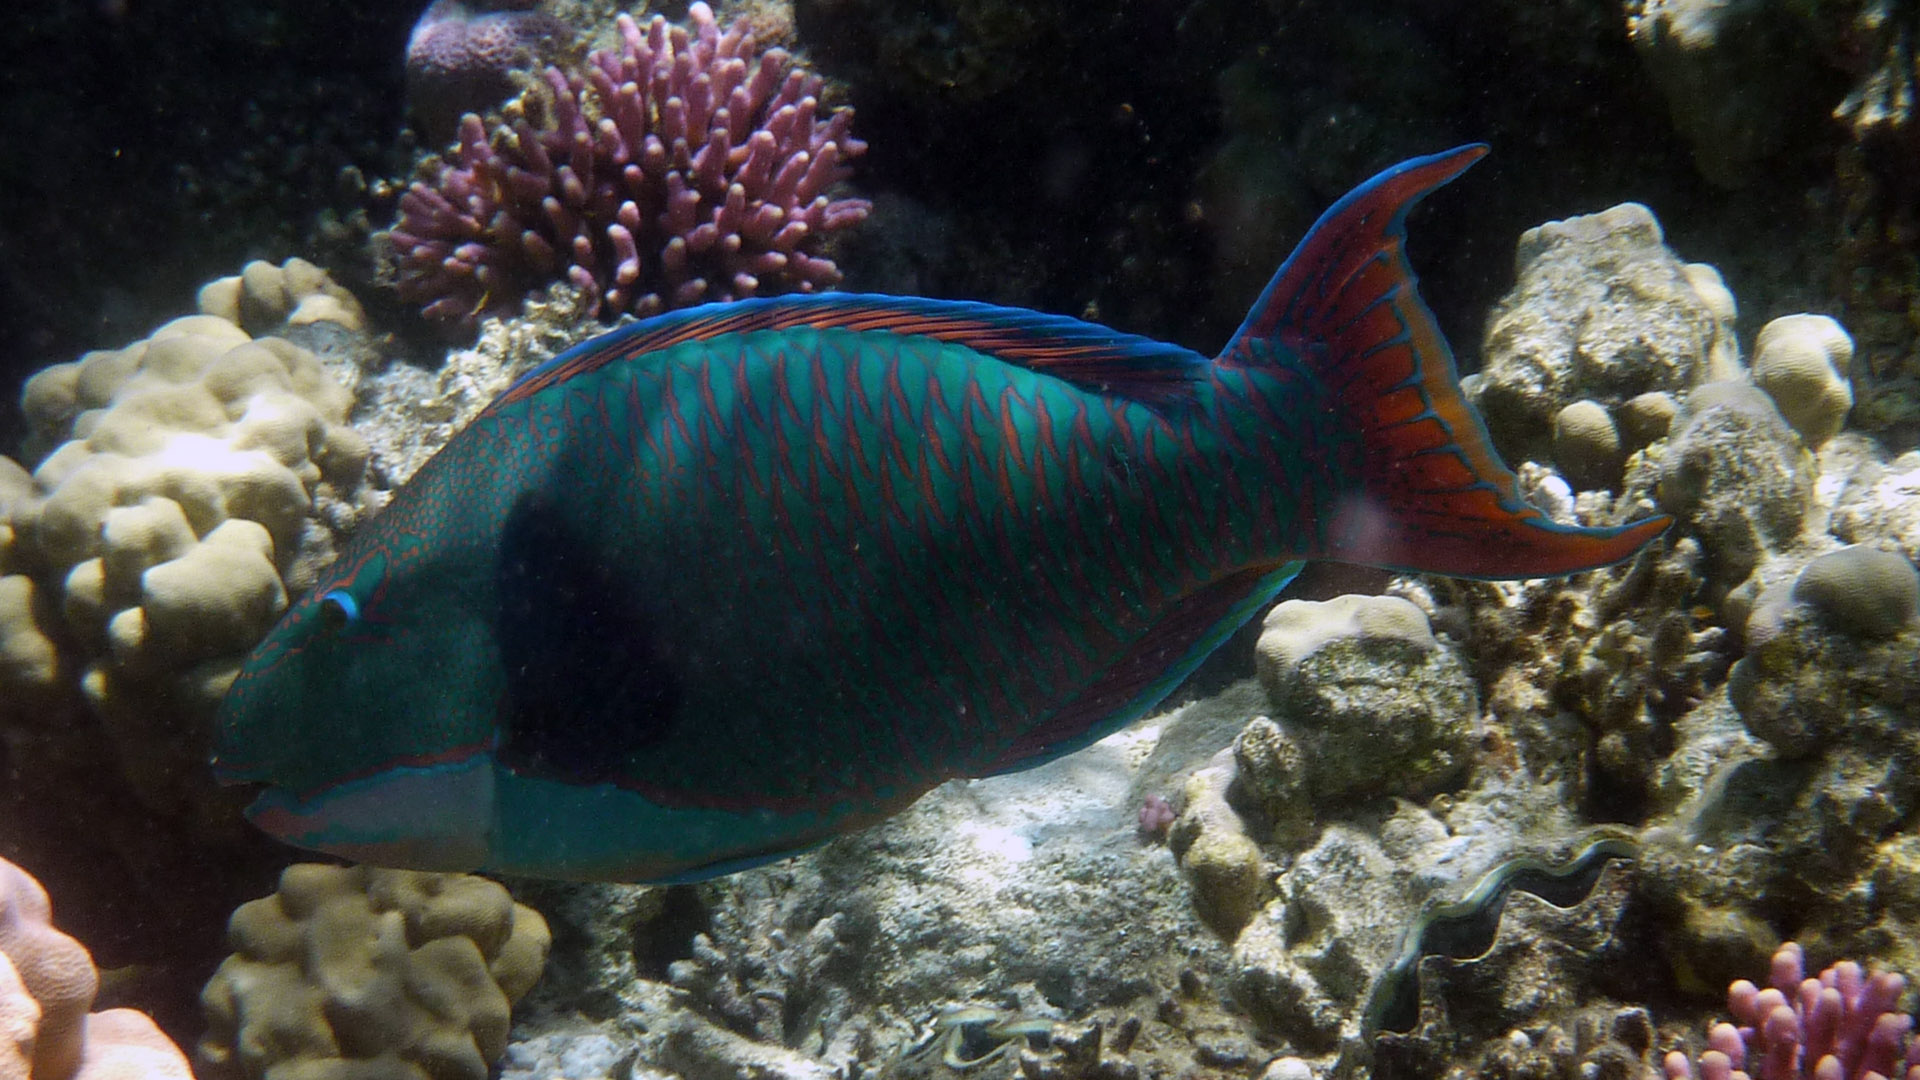 Masken-Papageifisch - Bicolour Parrotfish - Cetoscarus bicolor